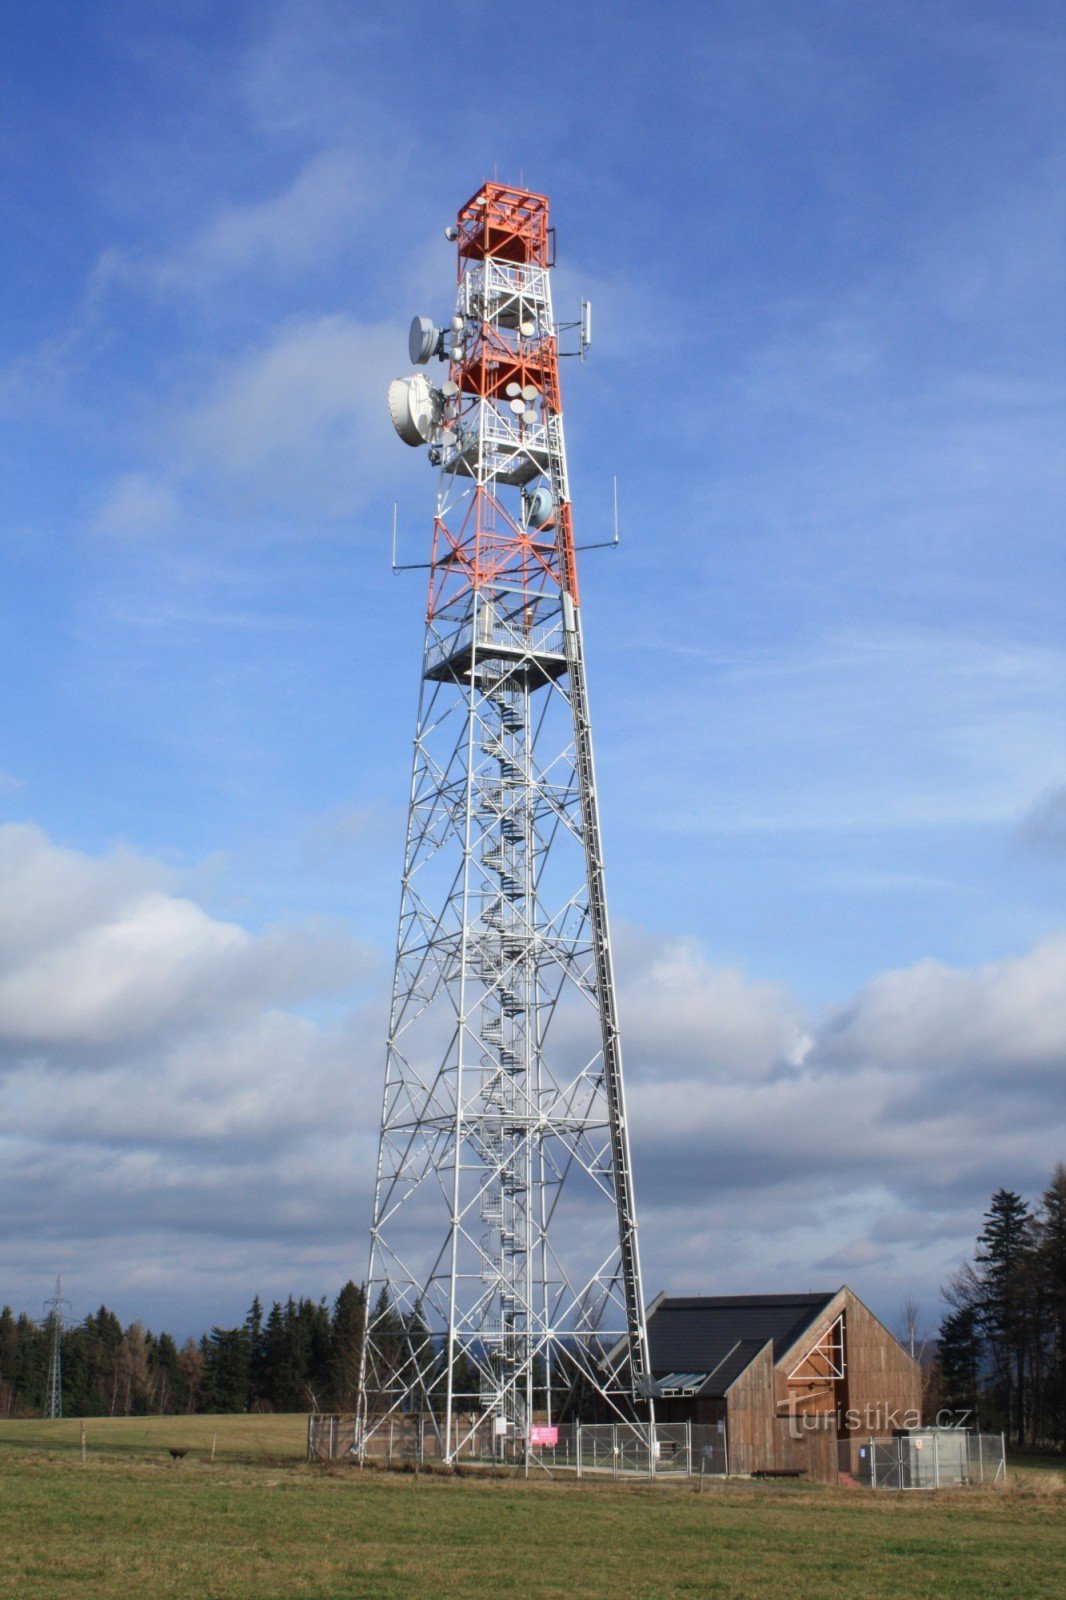 Kozlovský-kukkula - näkötorni